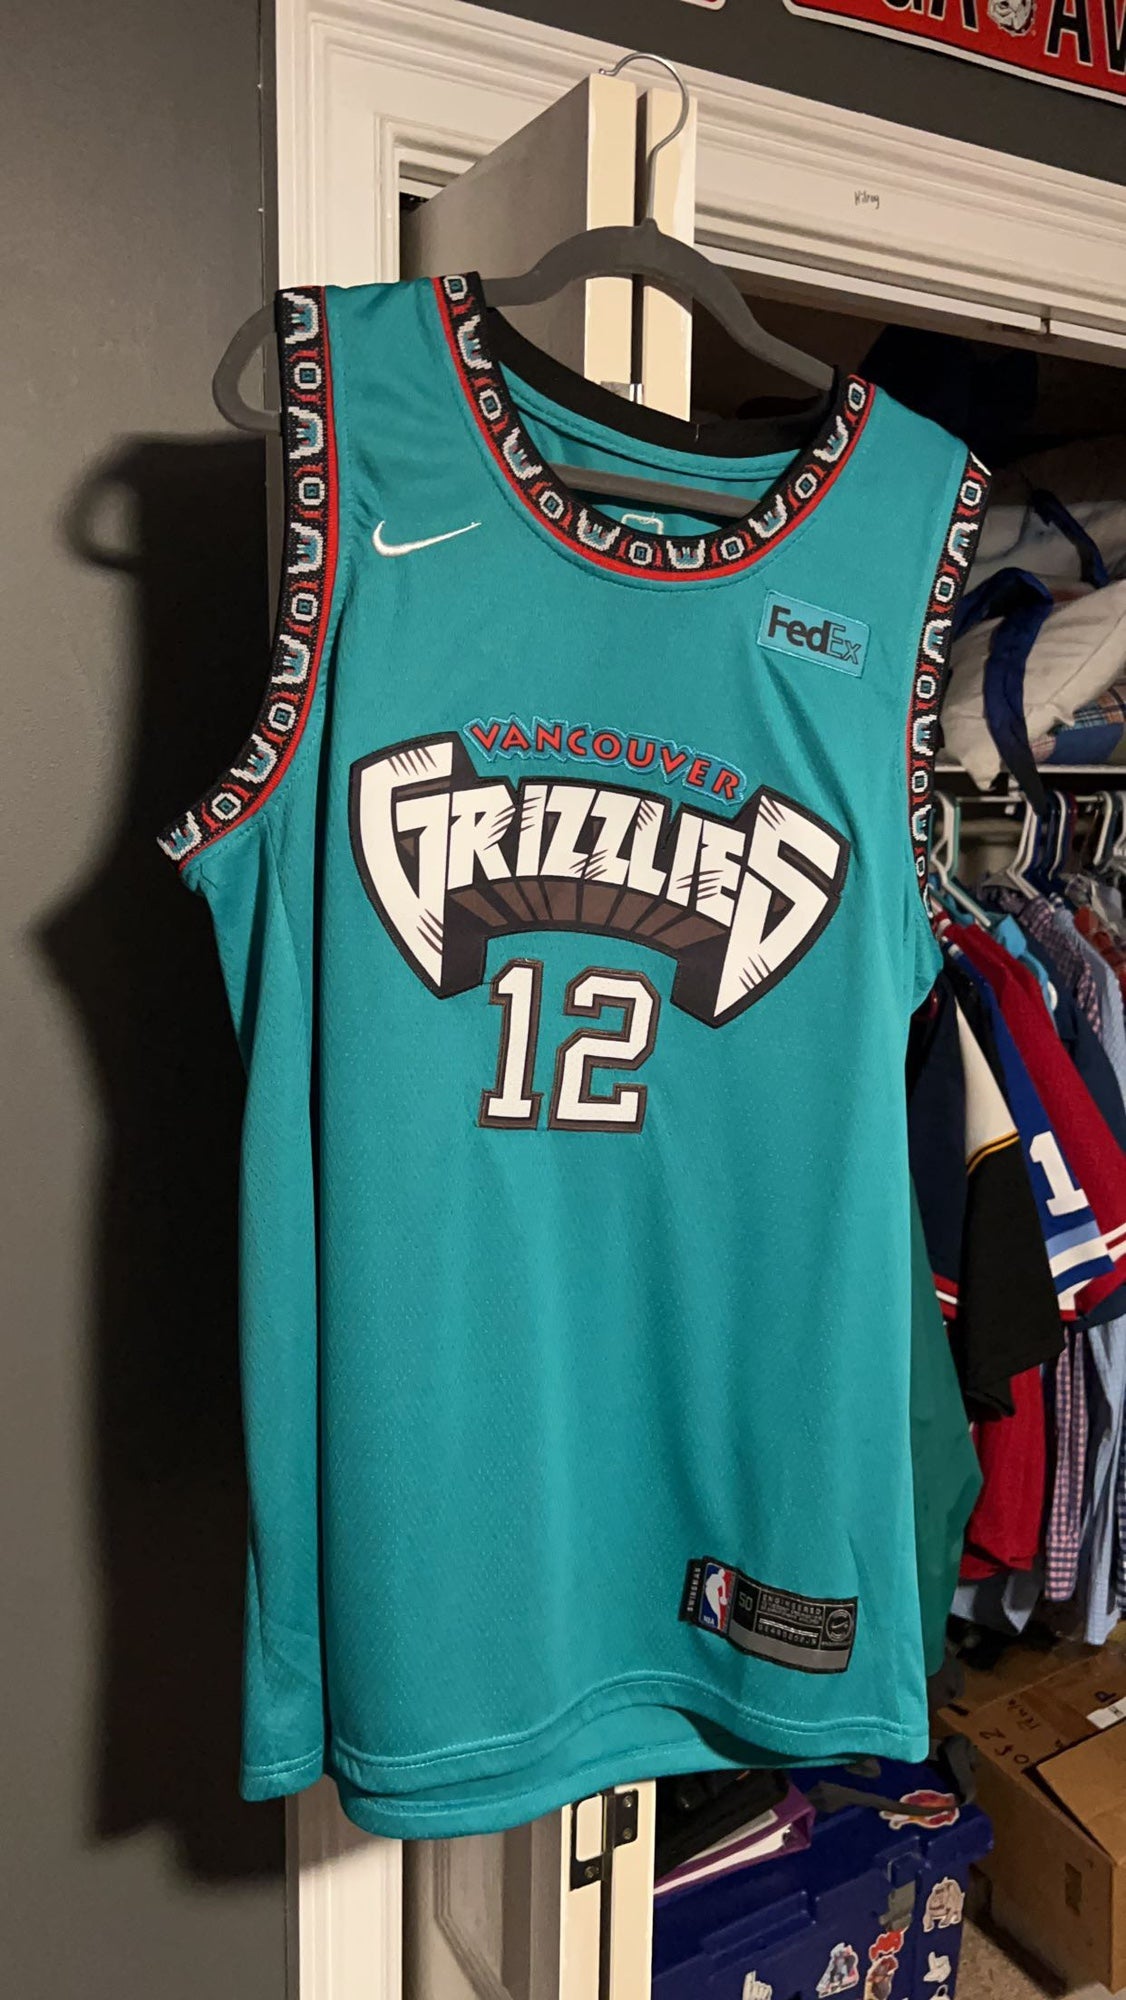 Memphis Grizzlies Throwback Jerseys, Grizzlies Retro & Vintage Throwback  Uniforms